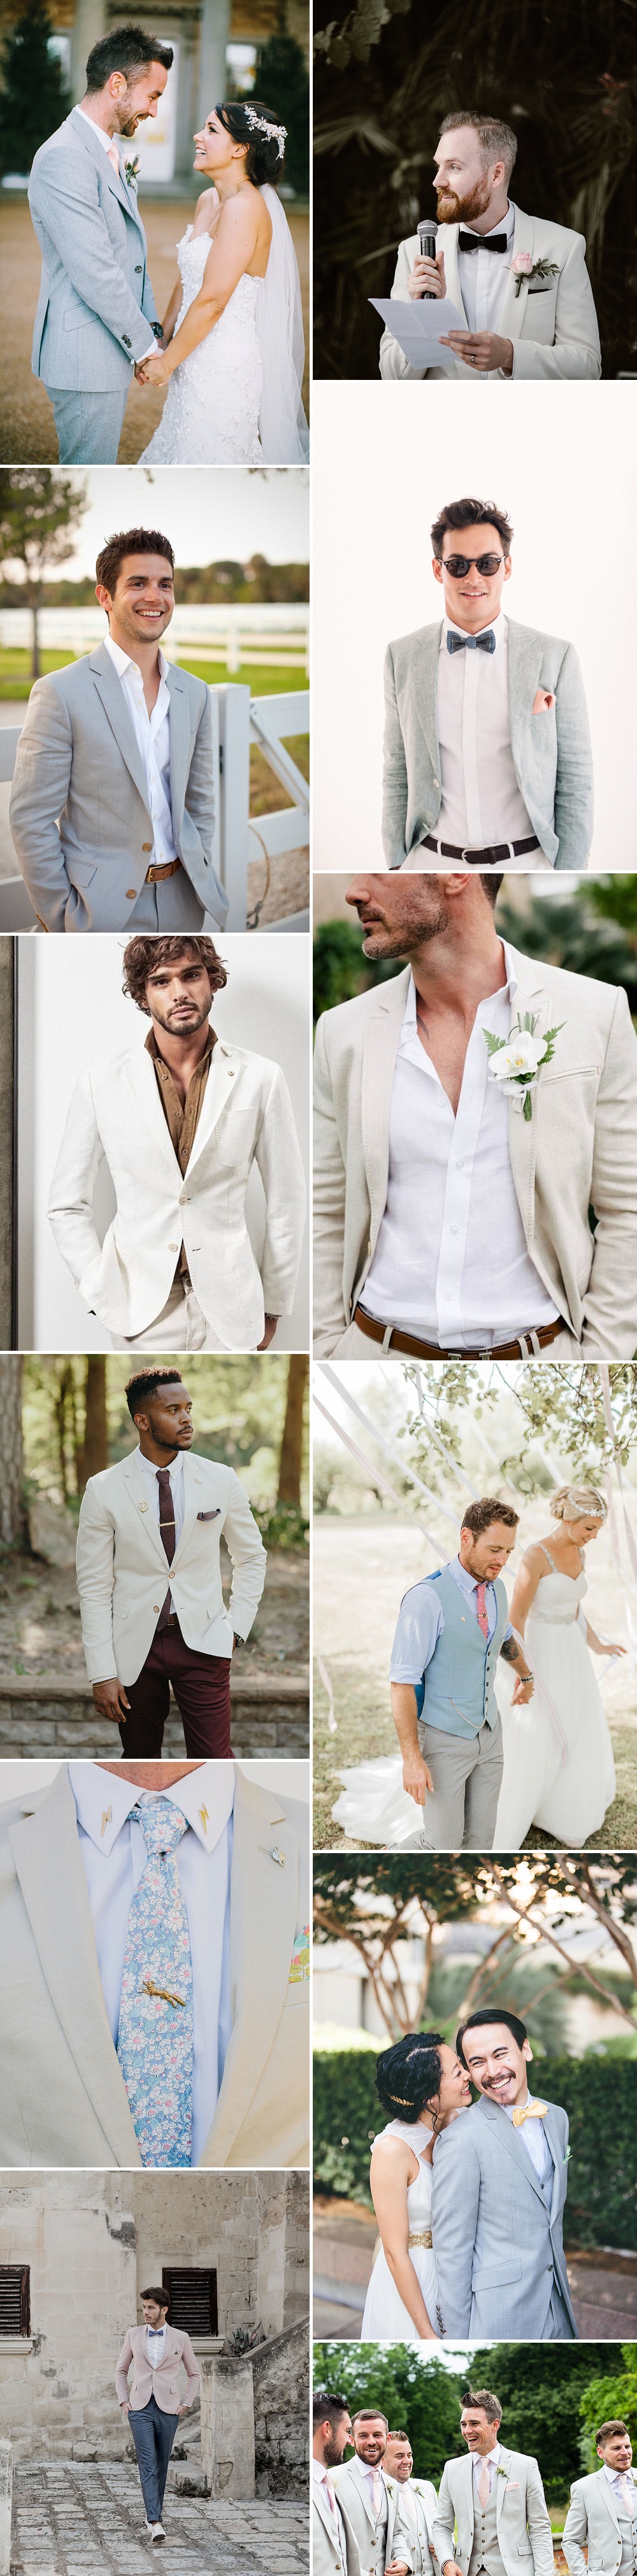 Groom Wearing Light Coloured Jacket For Wedding | Groom Fashion Inspiration